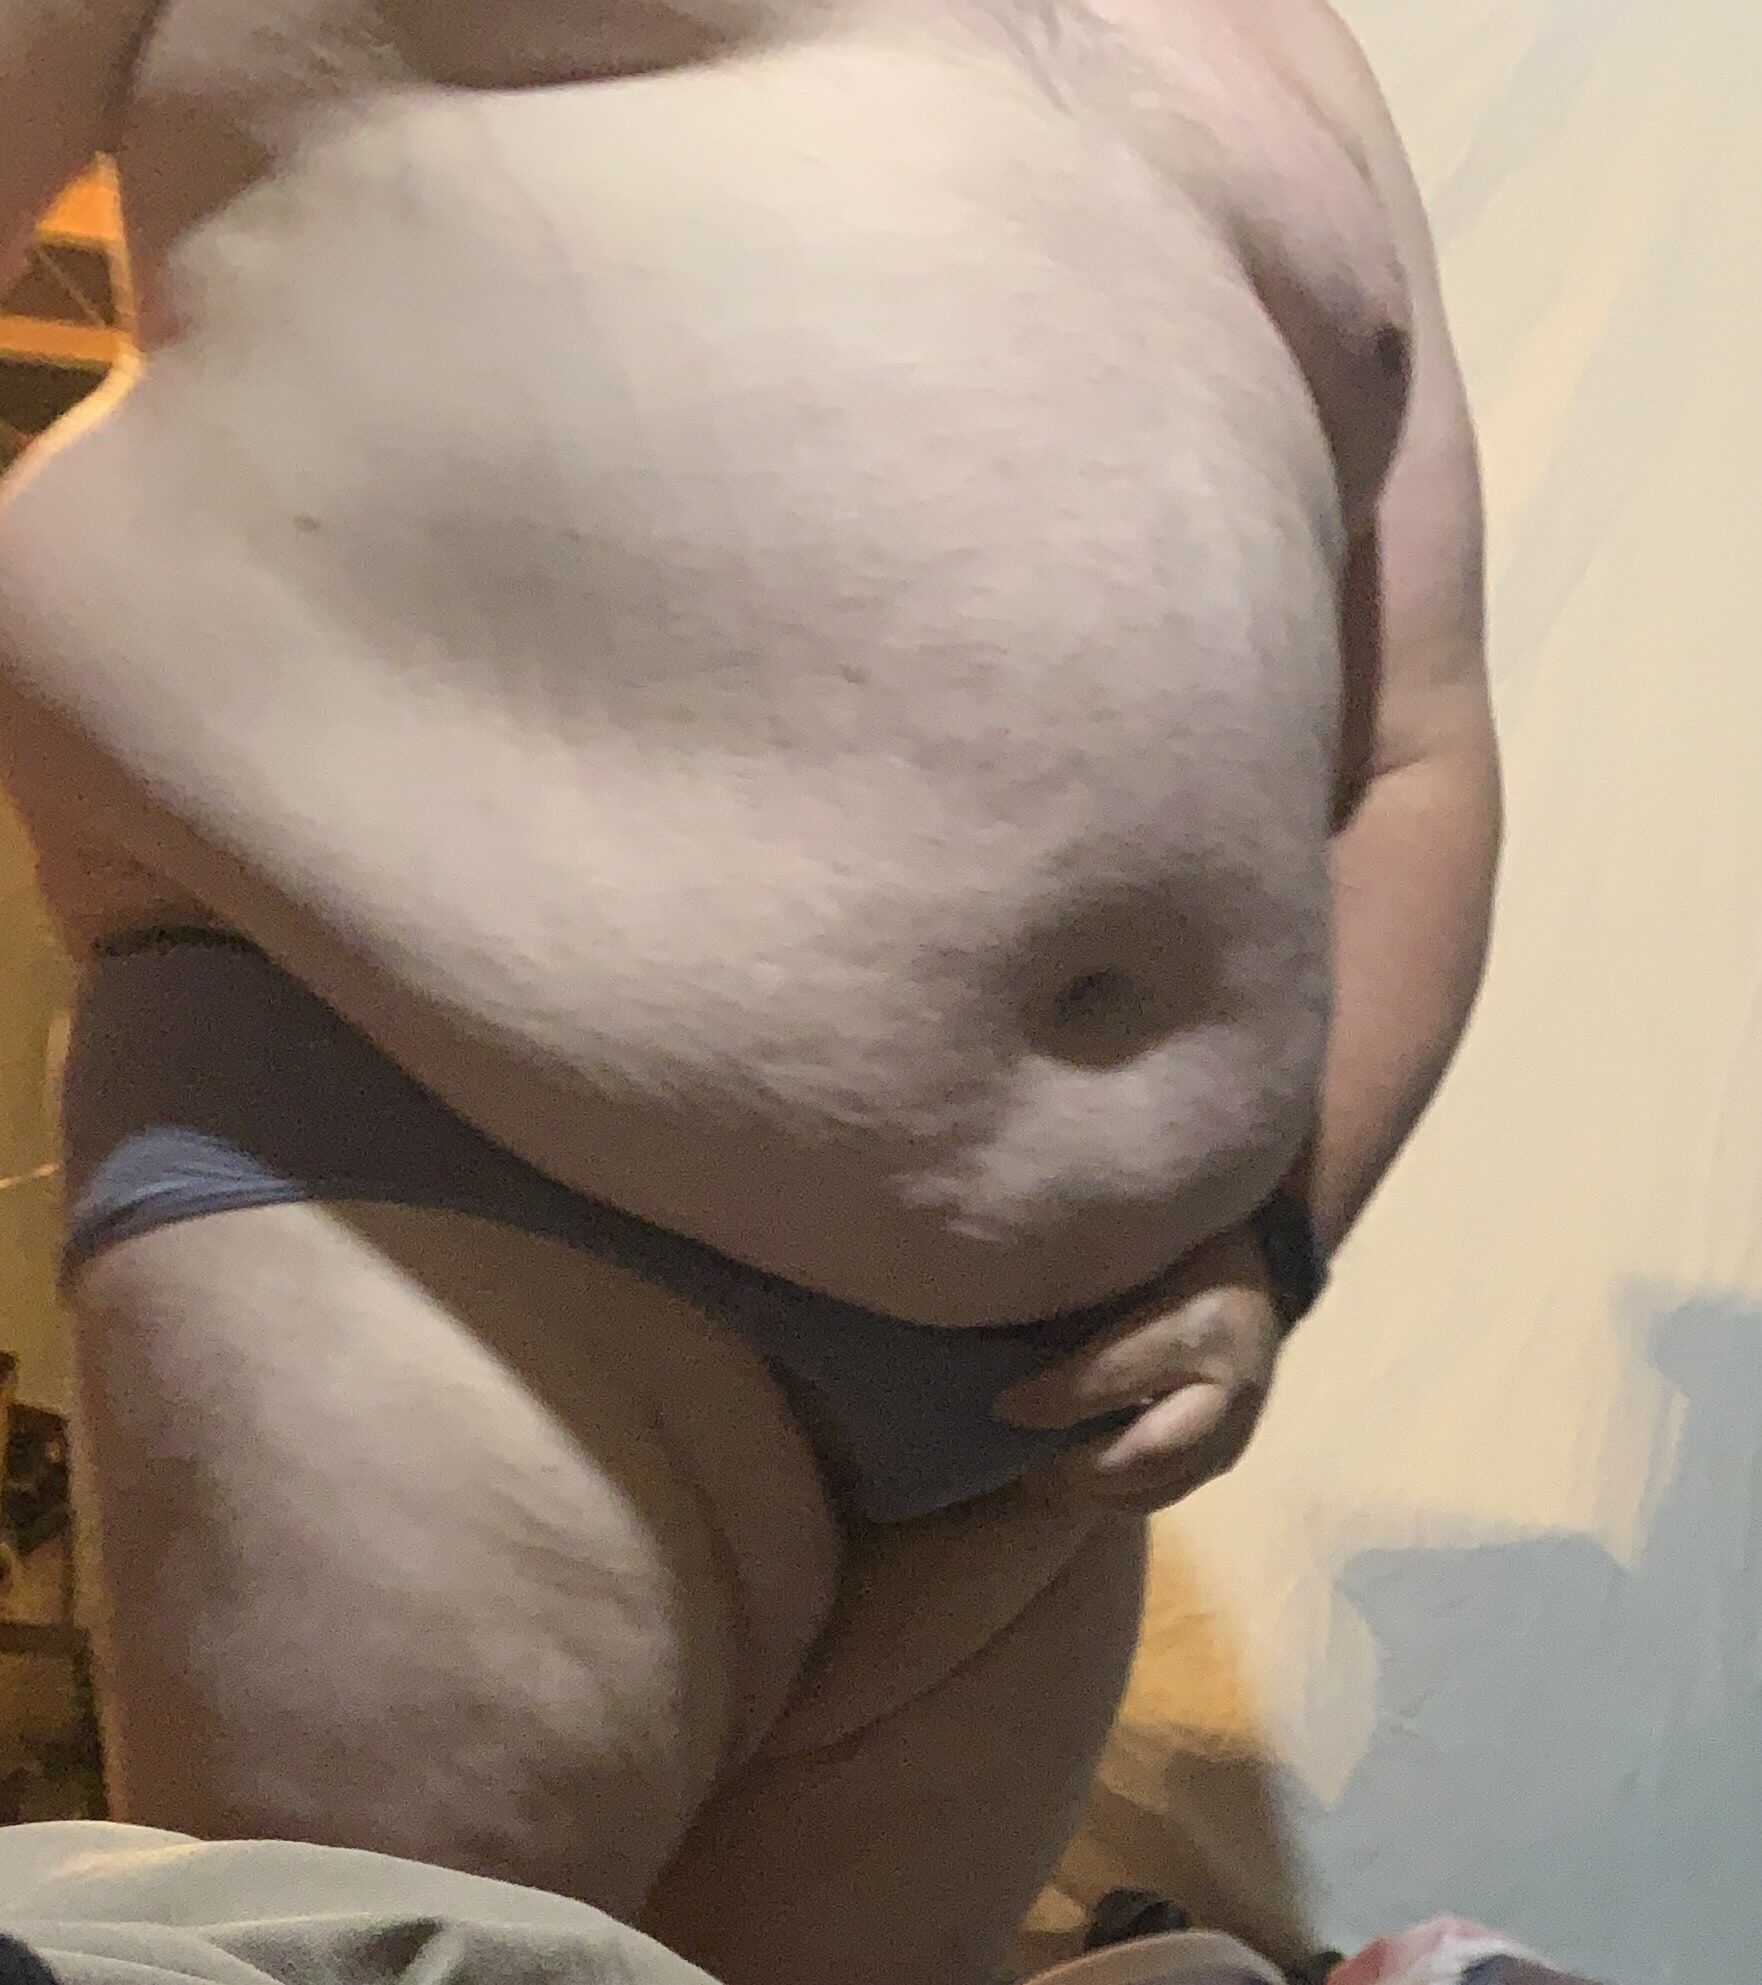 Horny big man